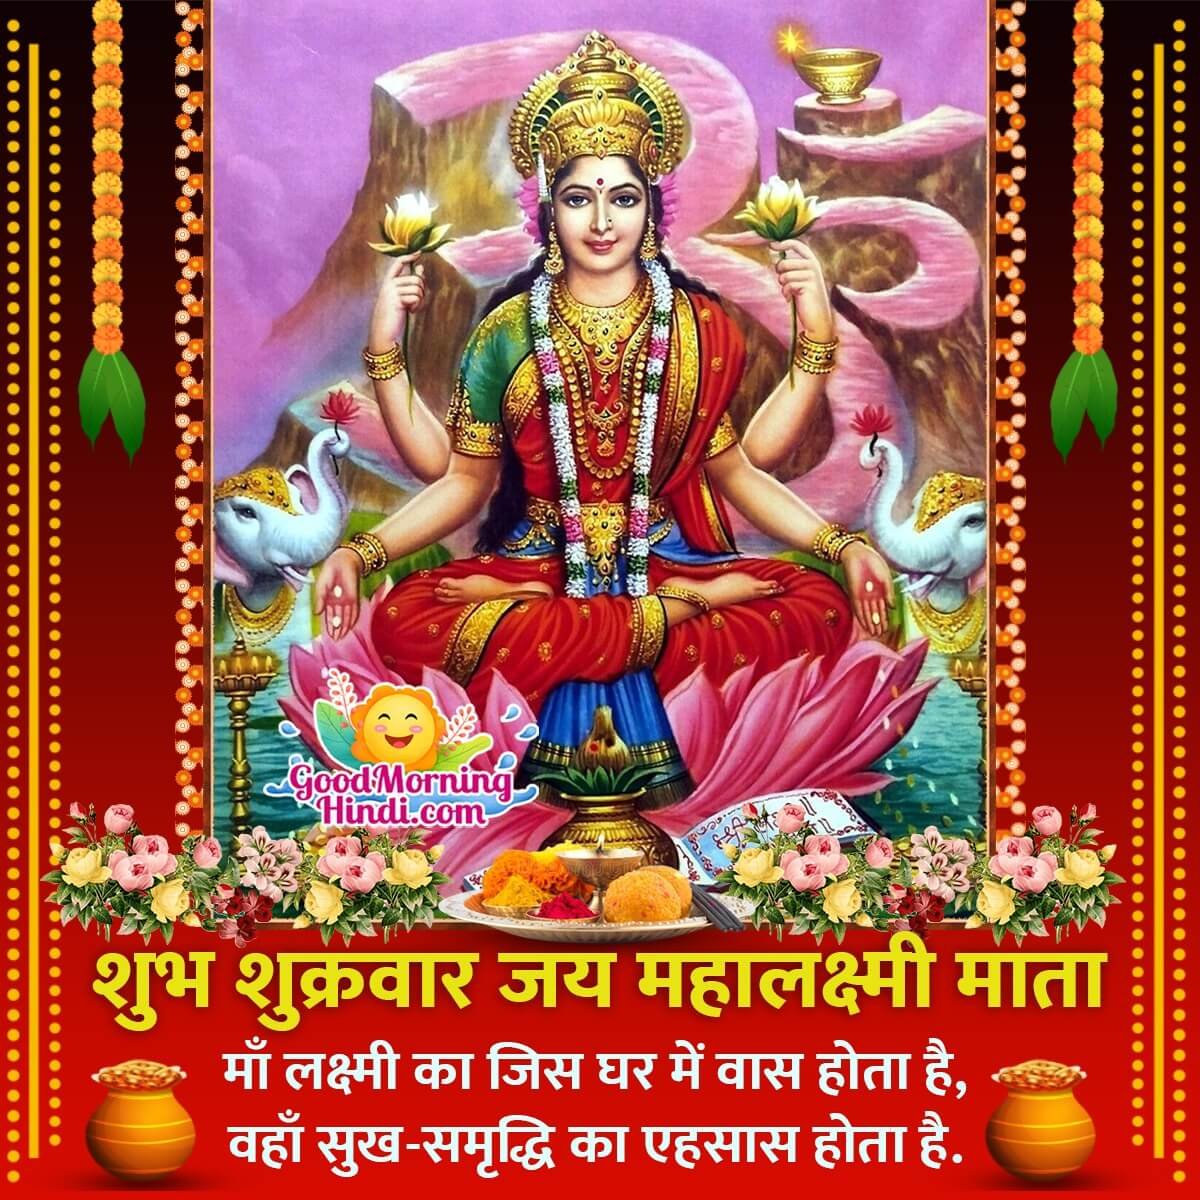 Shubh Shukrawar Jai Maha Lakshmi Mata Message